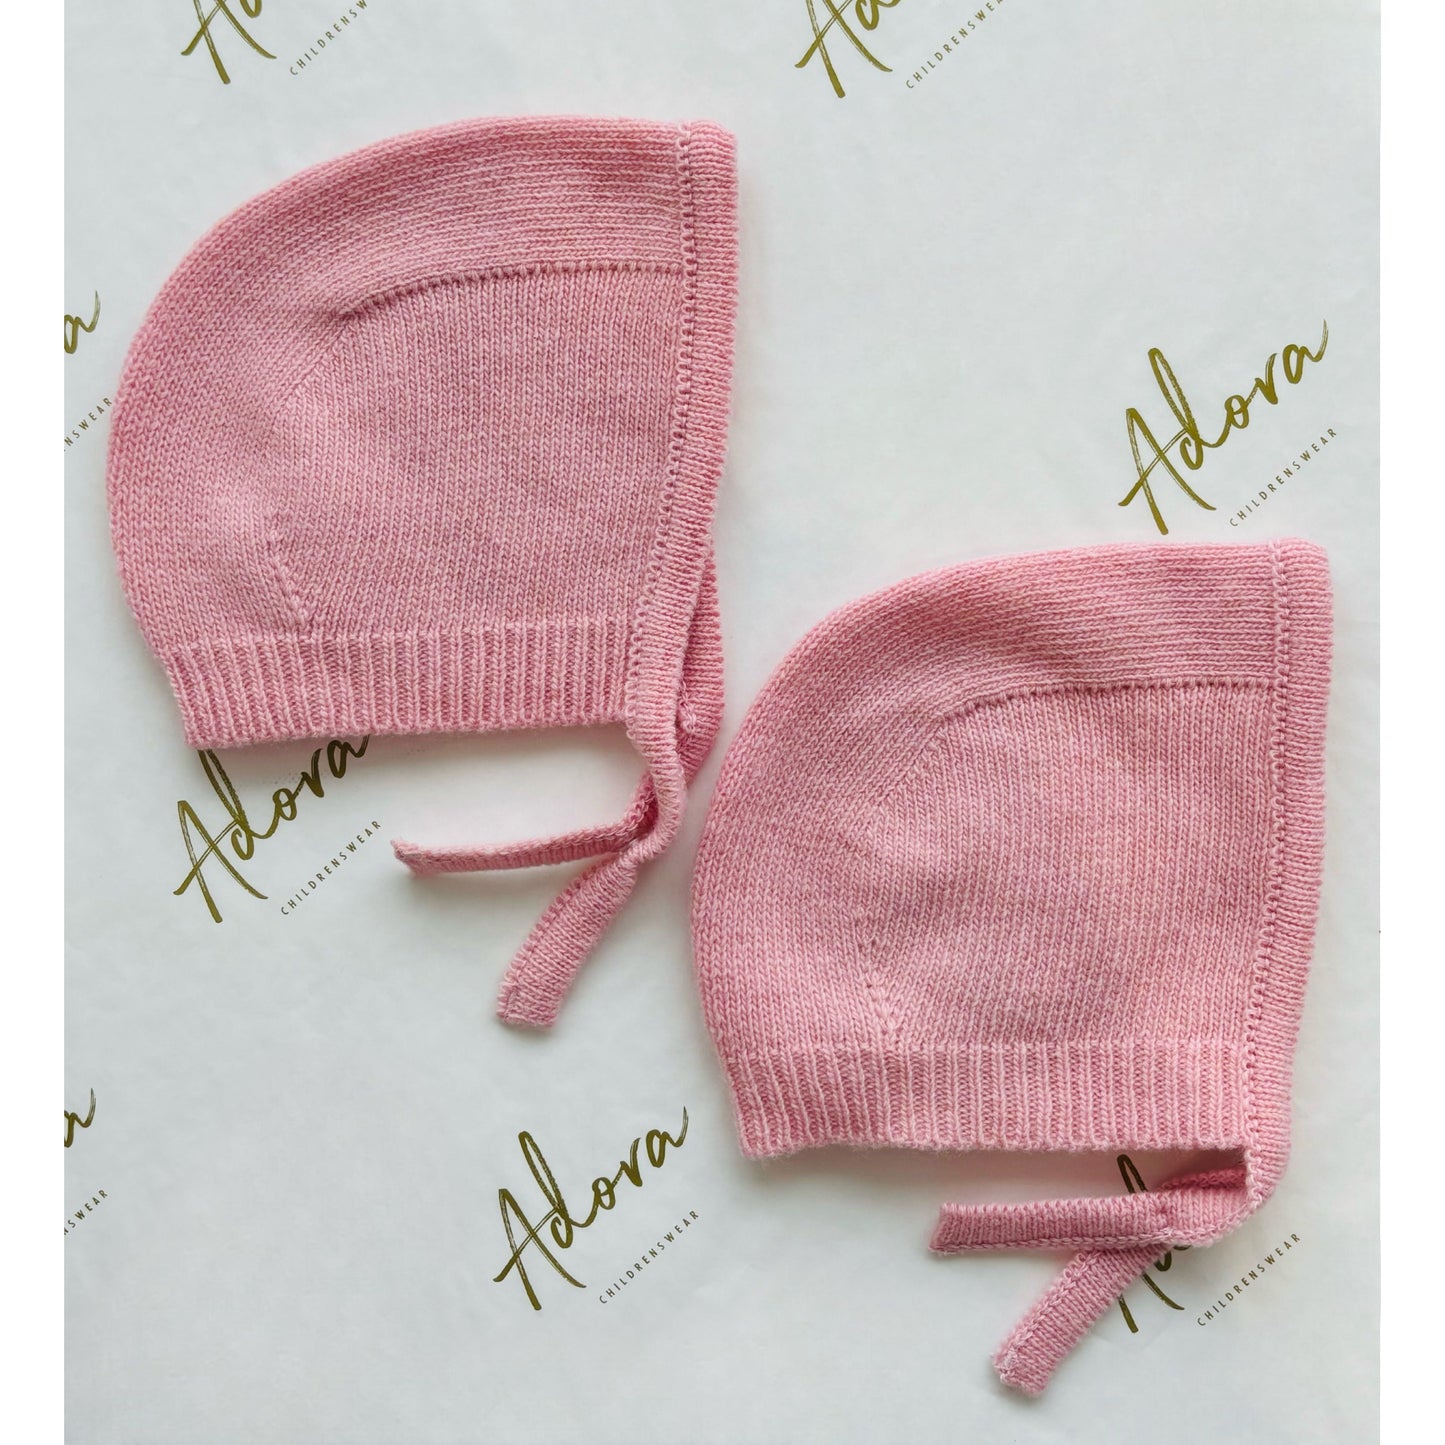 Merino wool knitted bonnet in Pink - Wedoble